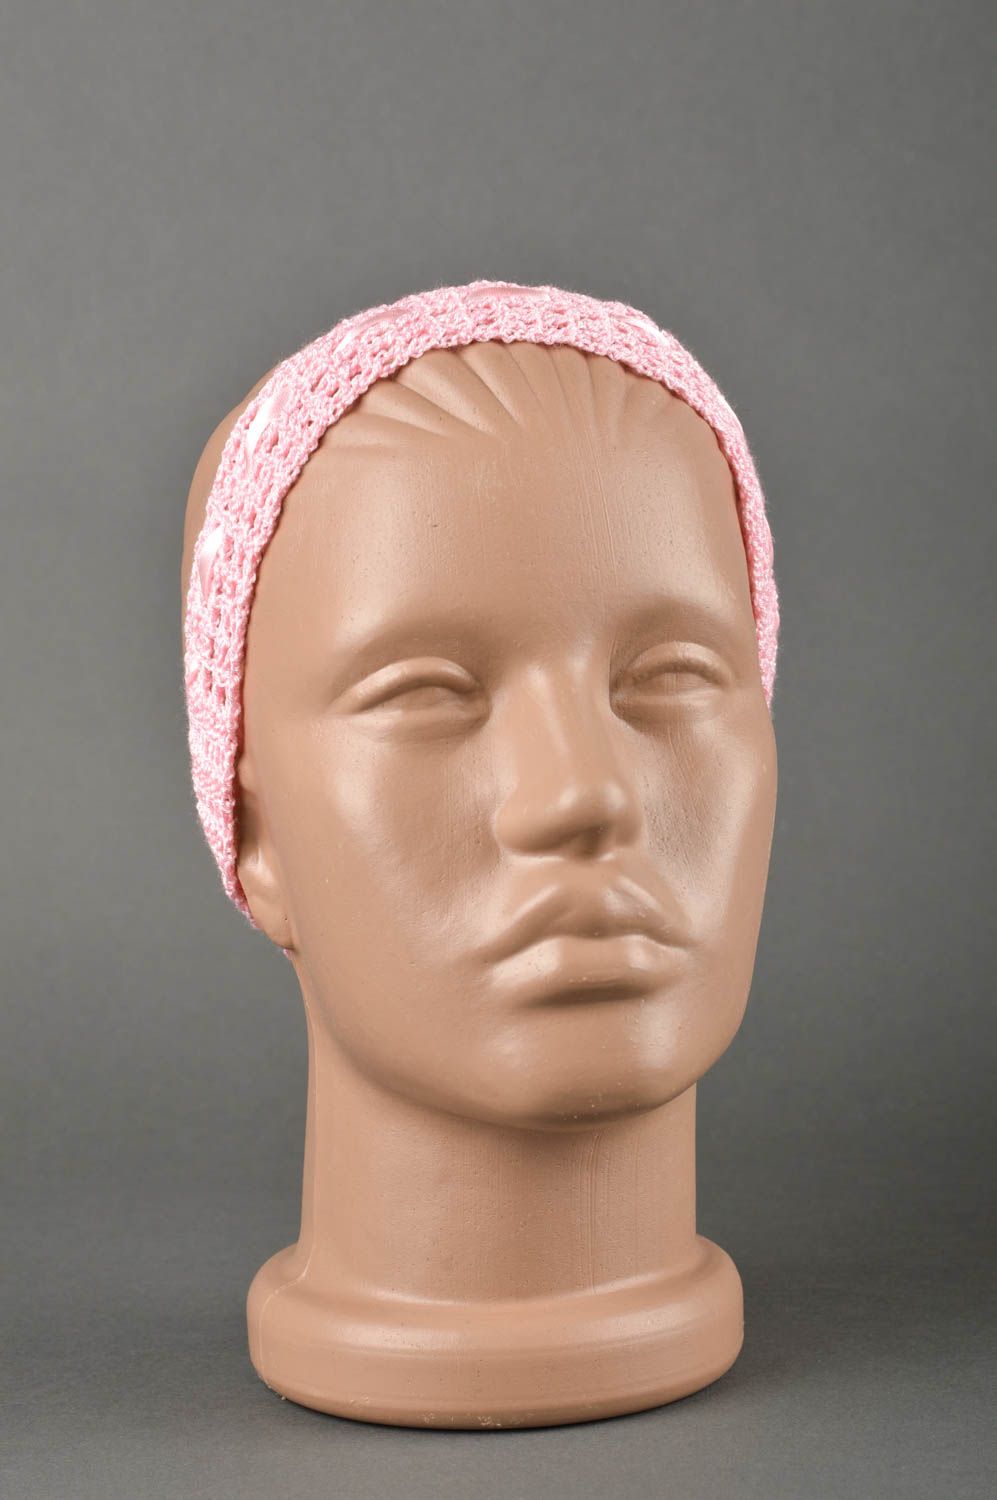 Beautiful handmade crochet headband crochet ideas designer hair accessories photo 1